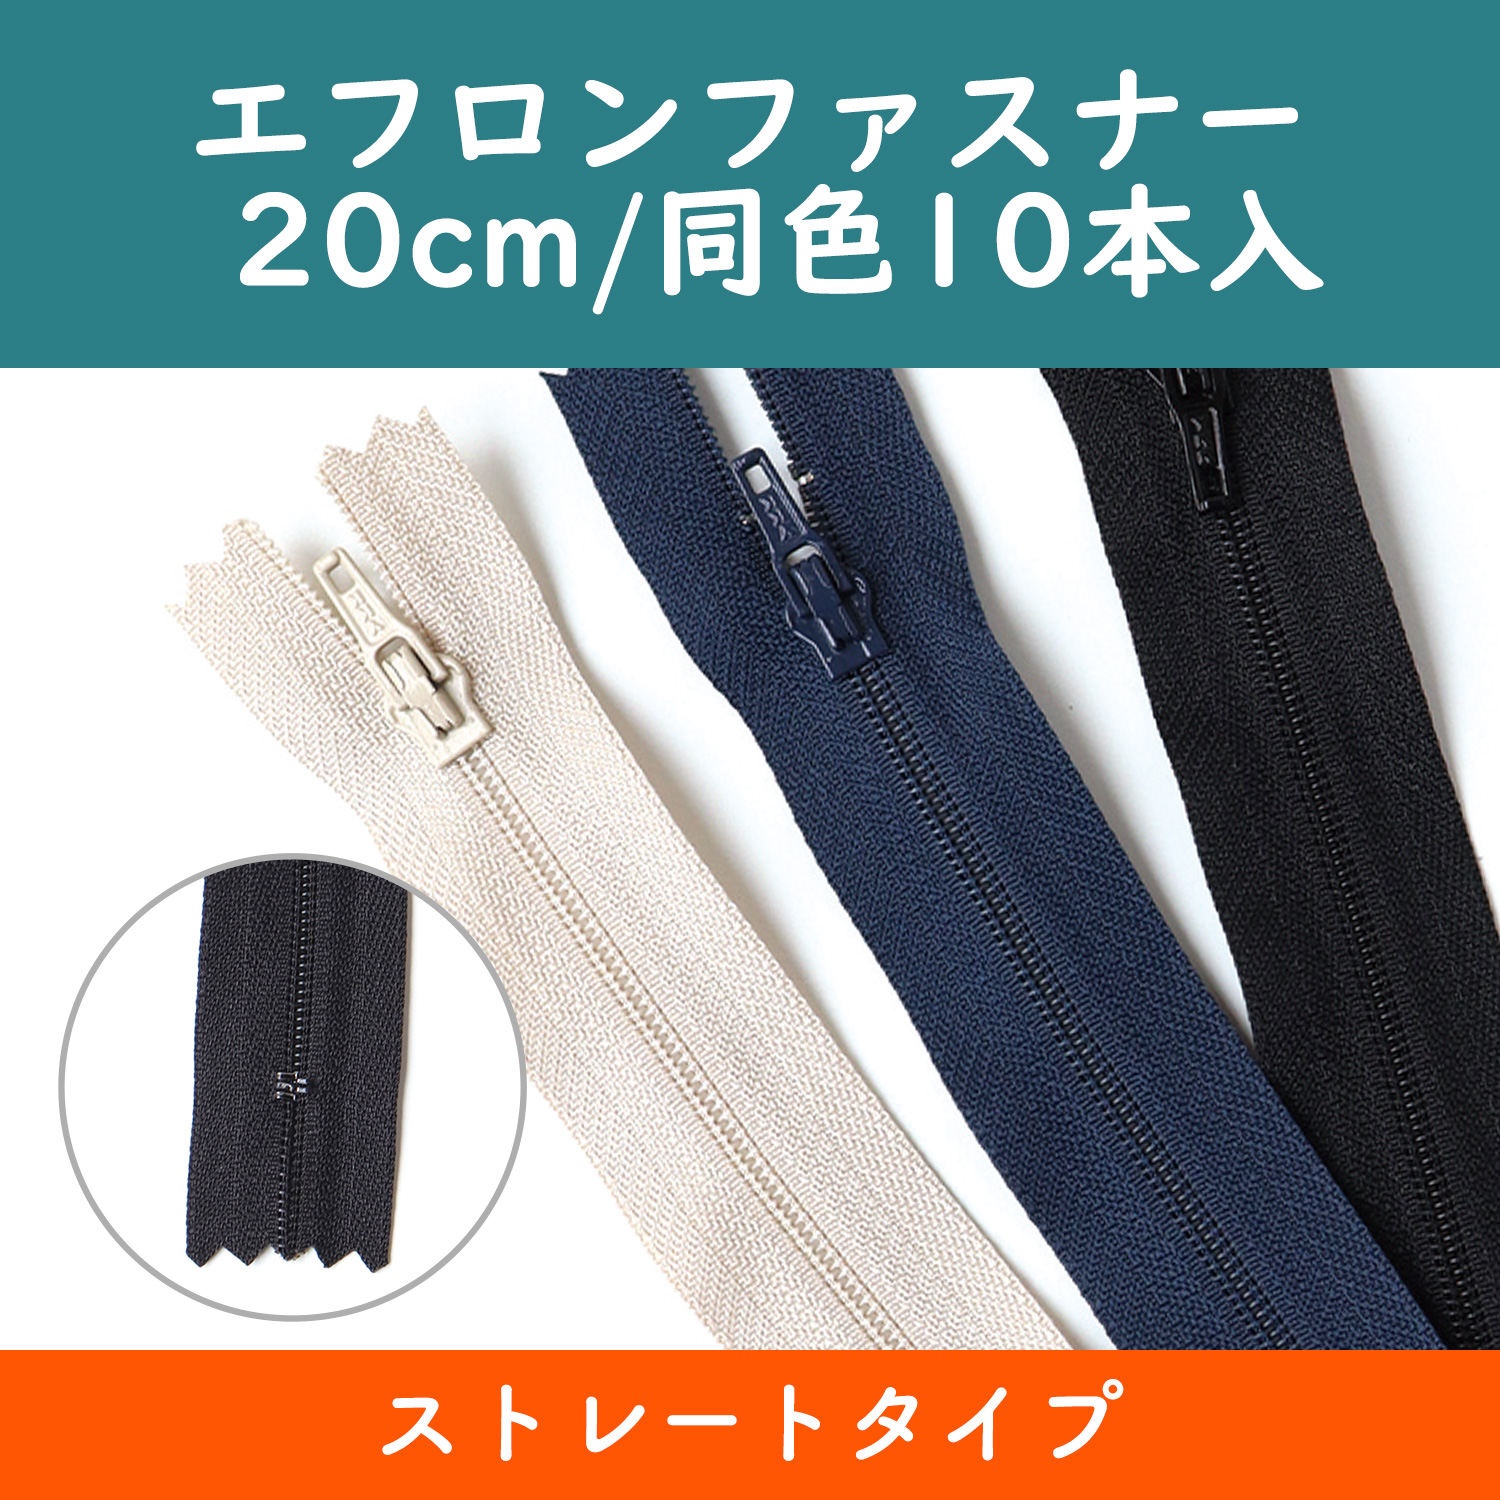 4EFC20　Zipper 20cm (bag)